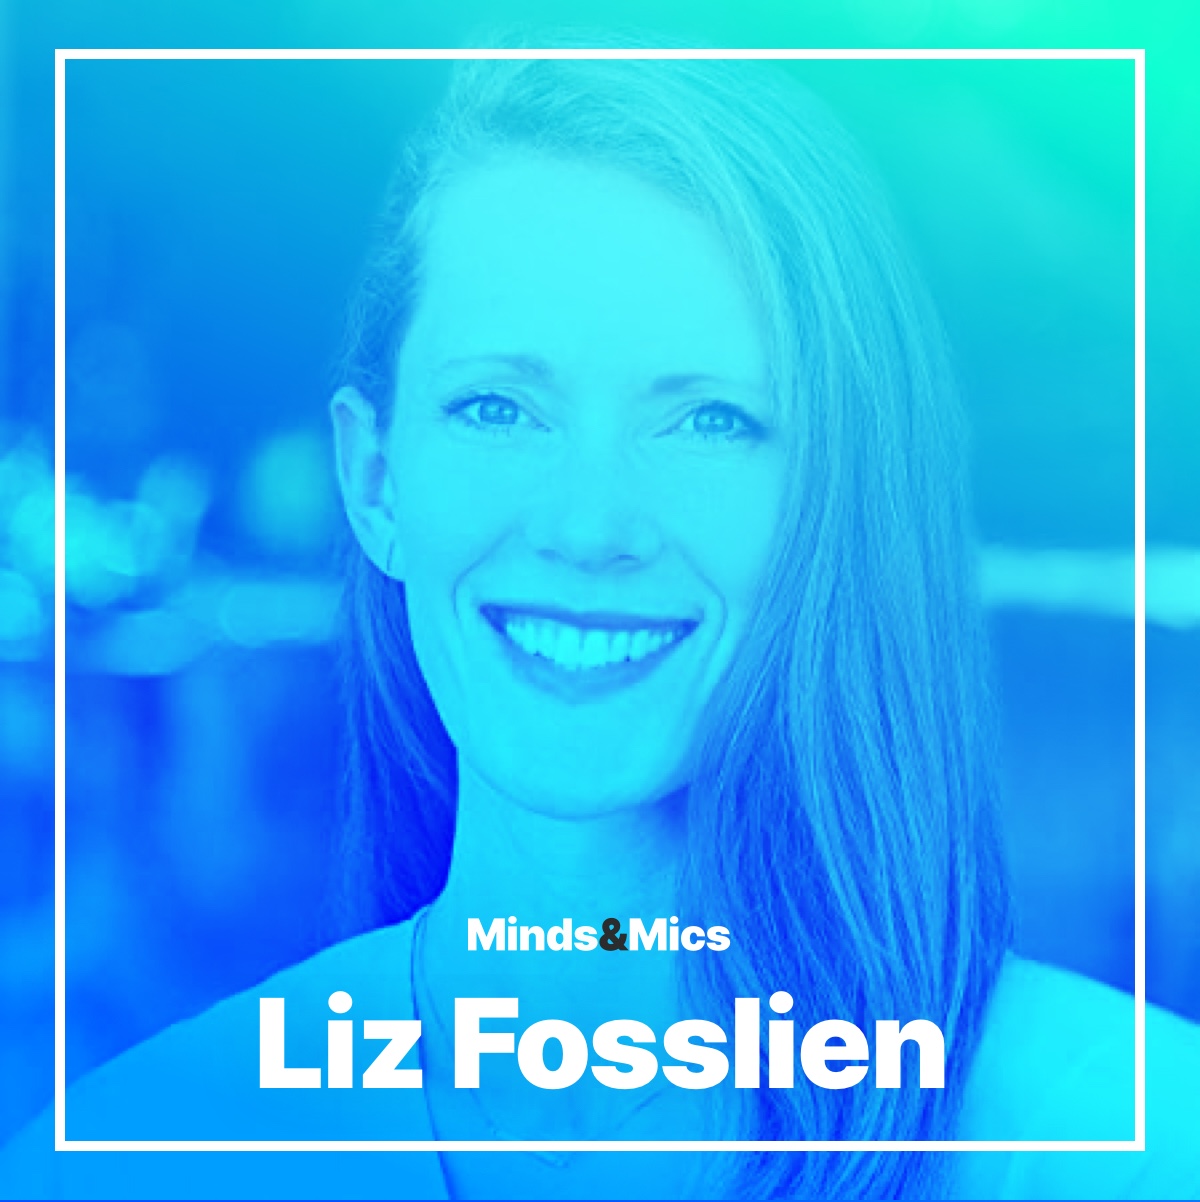 Liz Fosslien Minds and Mics Big Feelings Wignall